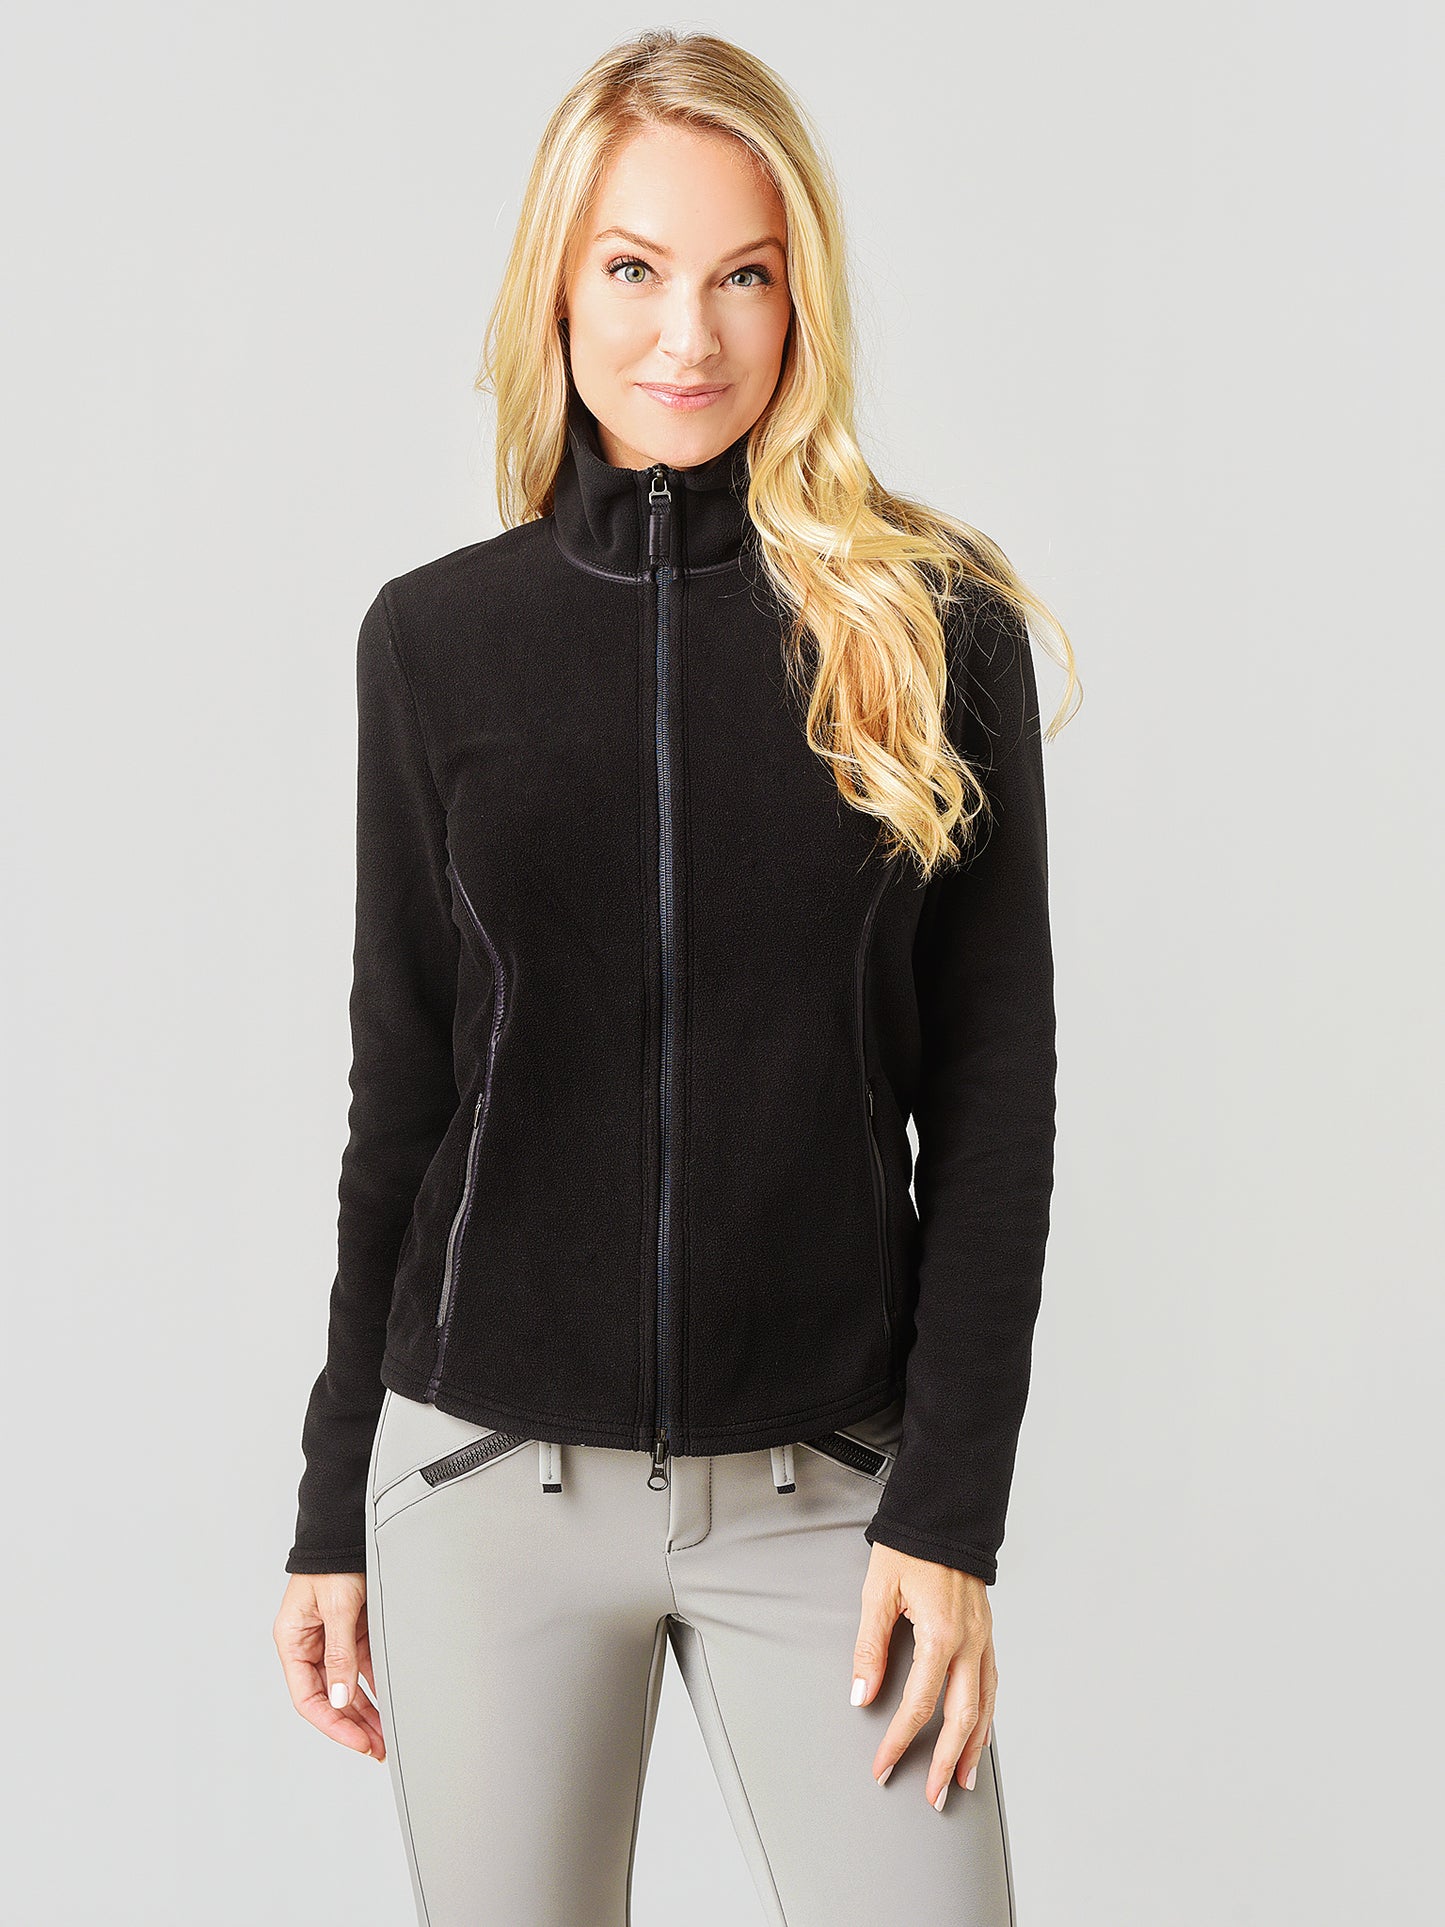 Frauenschuh Women's Vera Ski Fleece Jacket